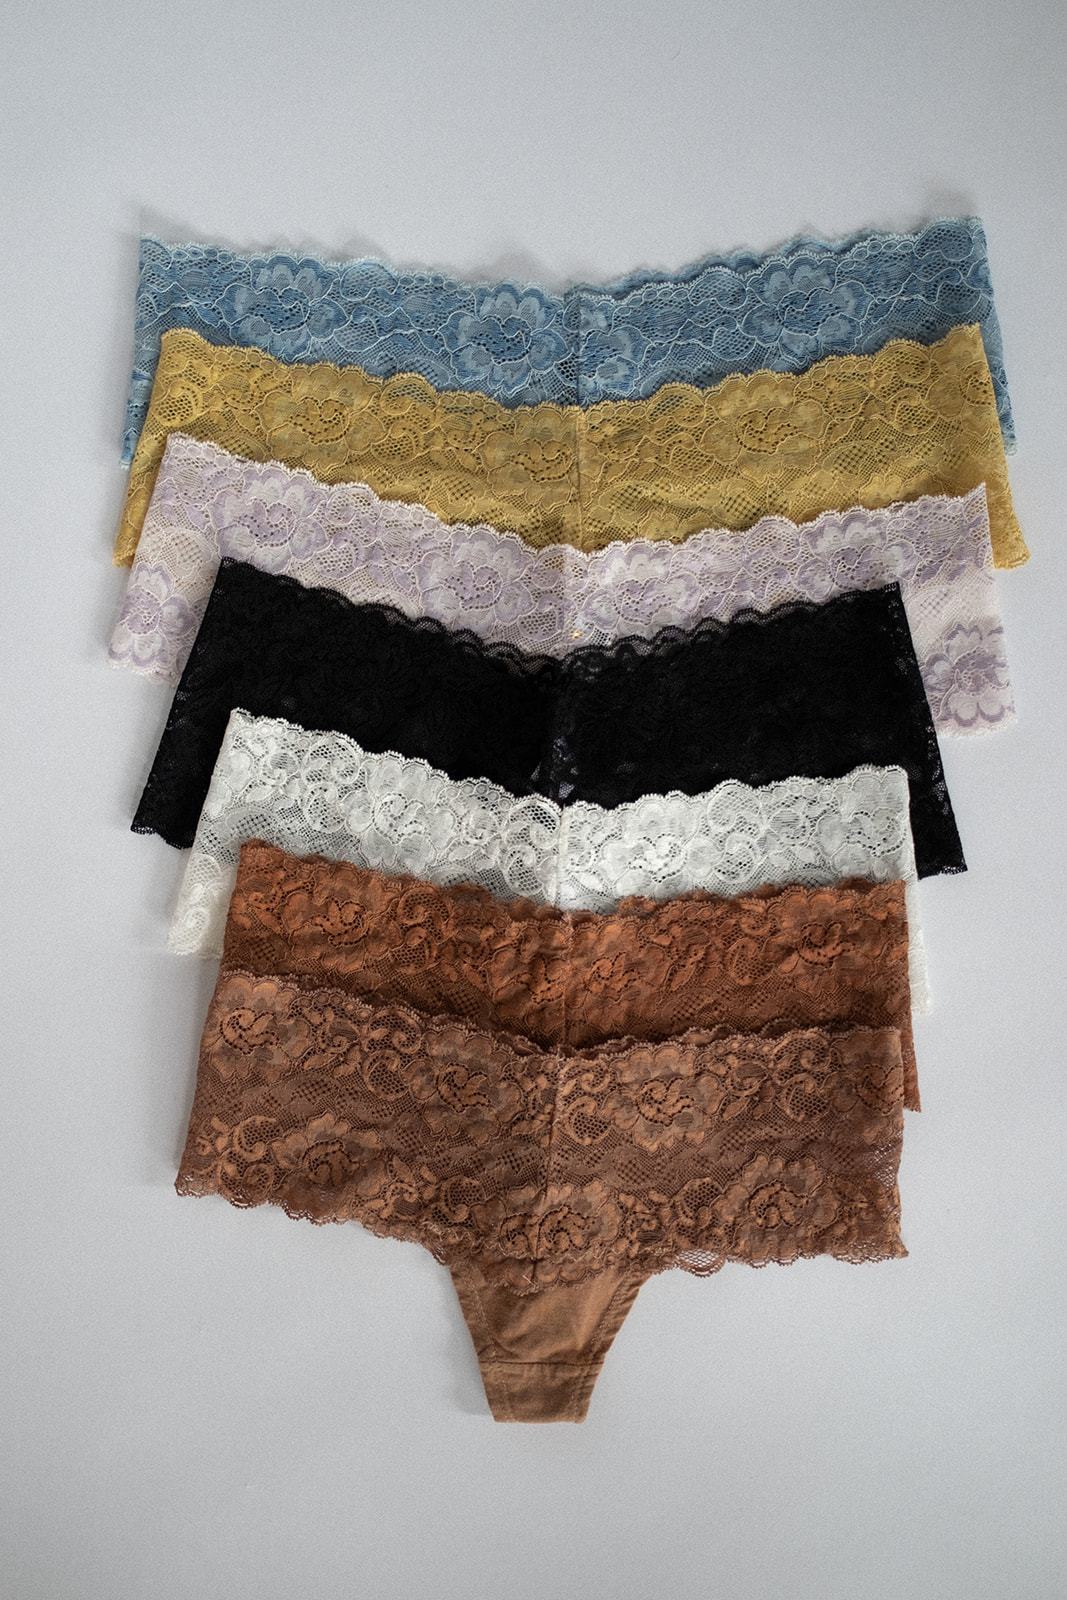 Lace Brazilian Panty in Hand Dyed Terra CottaWomen's Underwear from MADI - SHOPELEOS